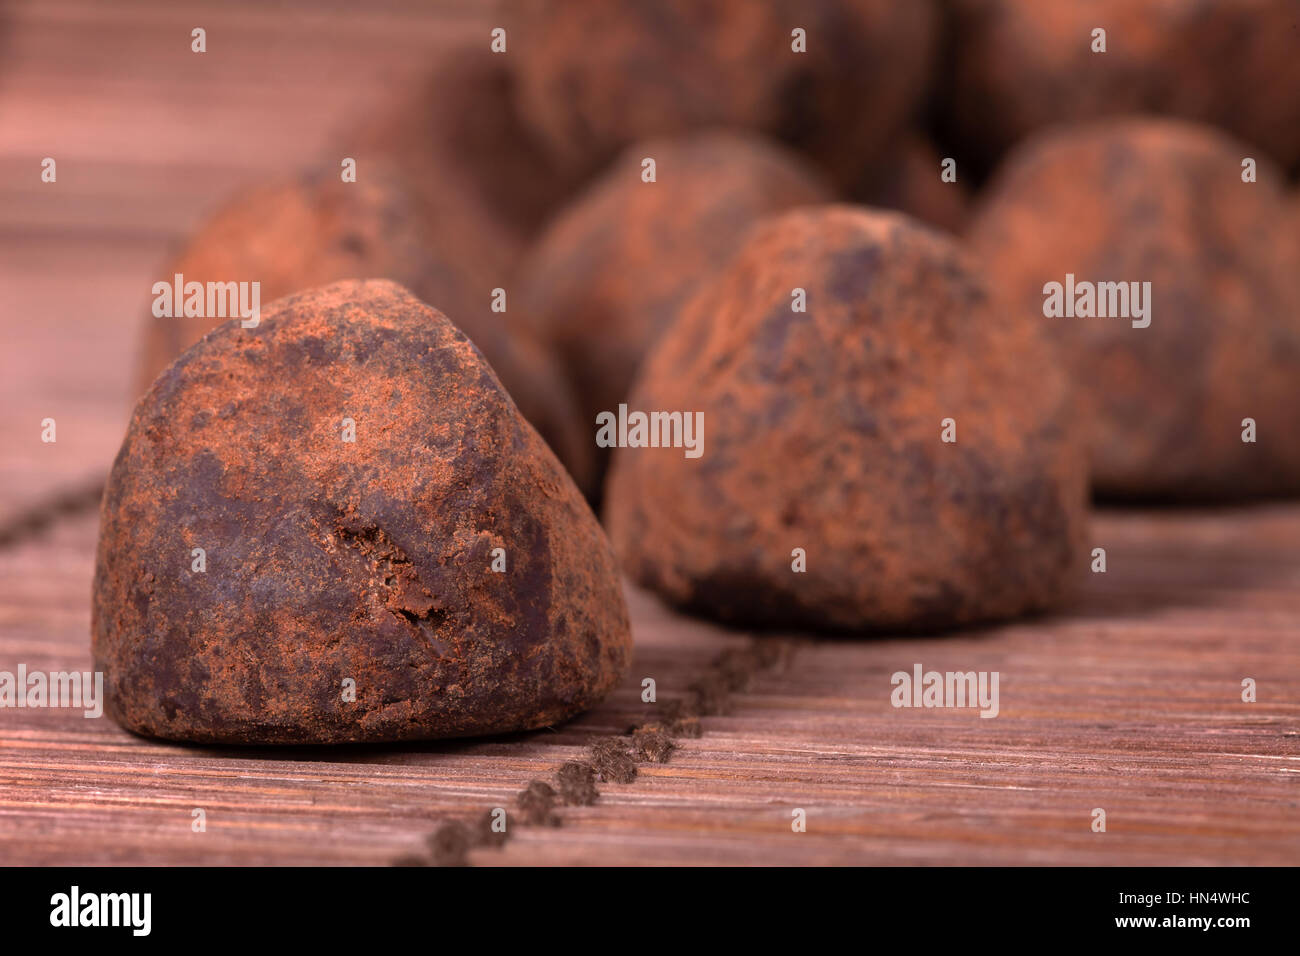 Black chocolate truffles covered with cinnamon powder Stock Photo